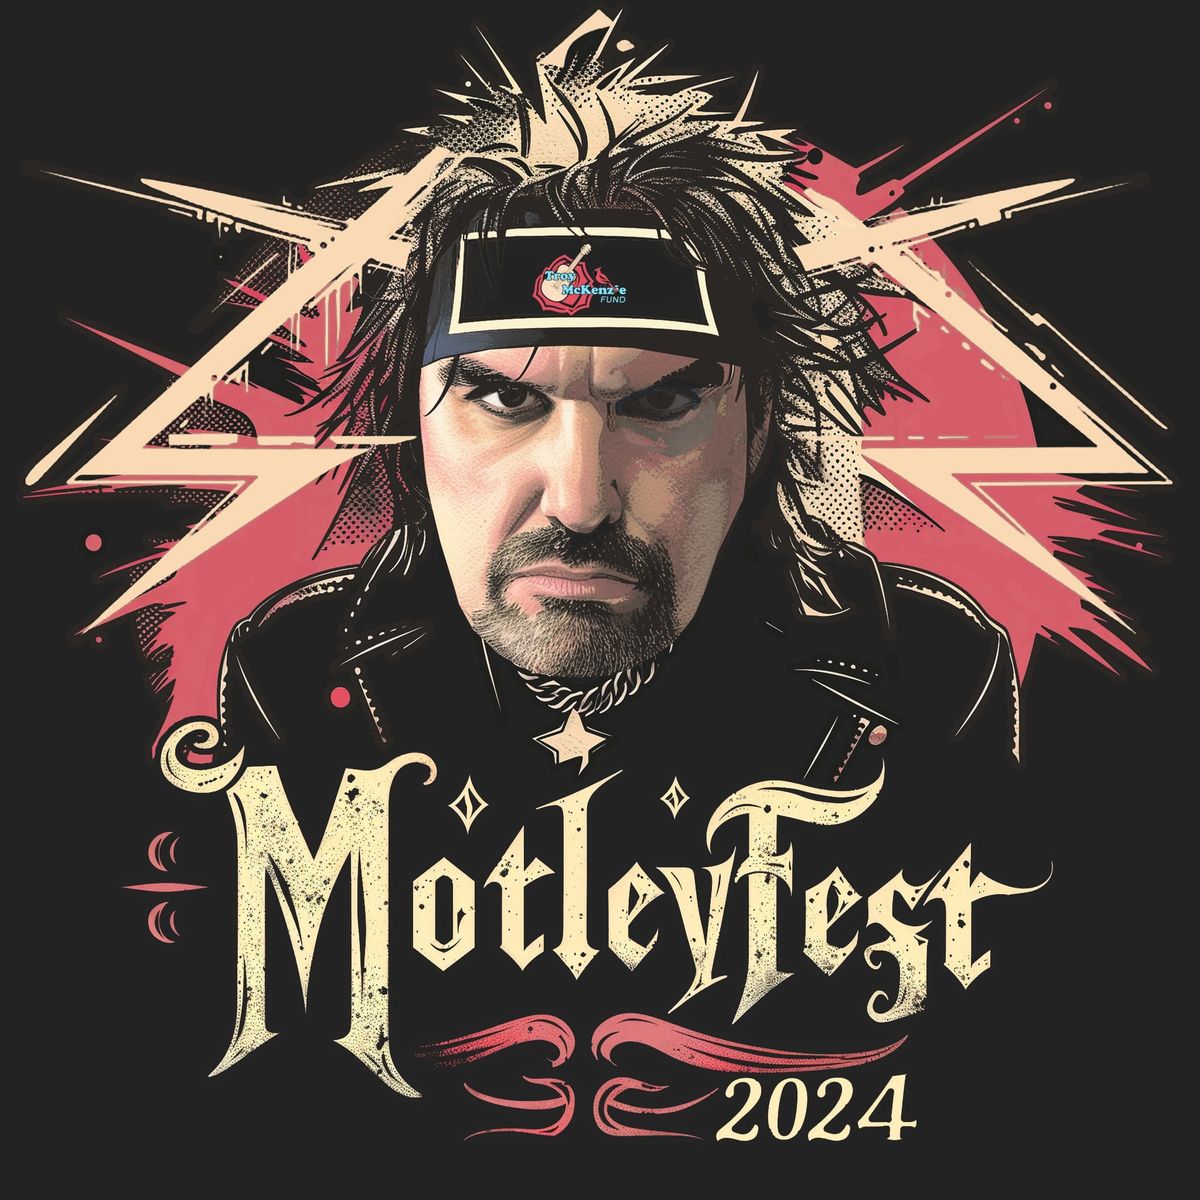 MotleyFest 2024